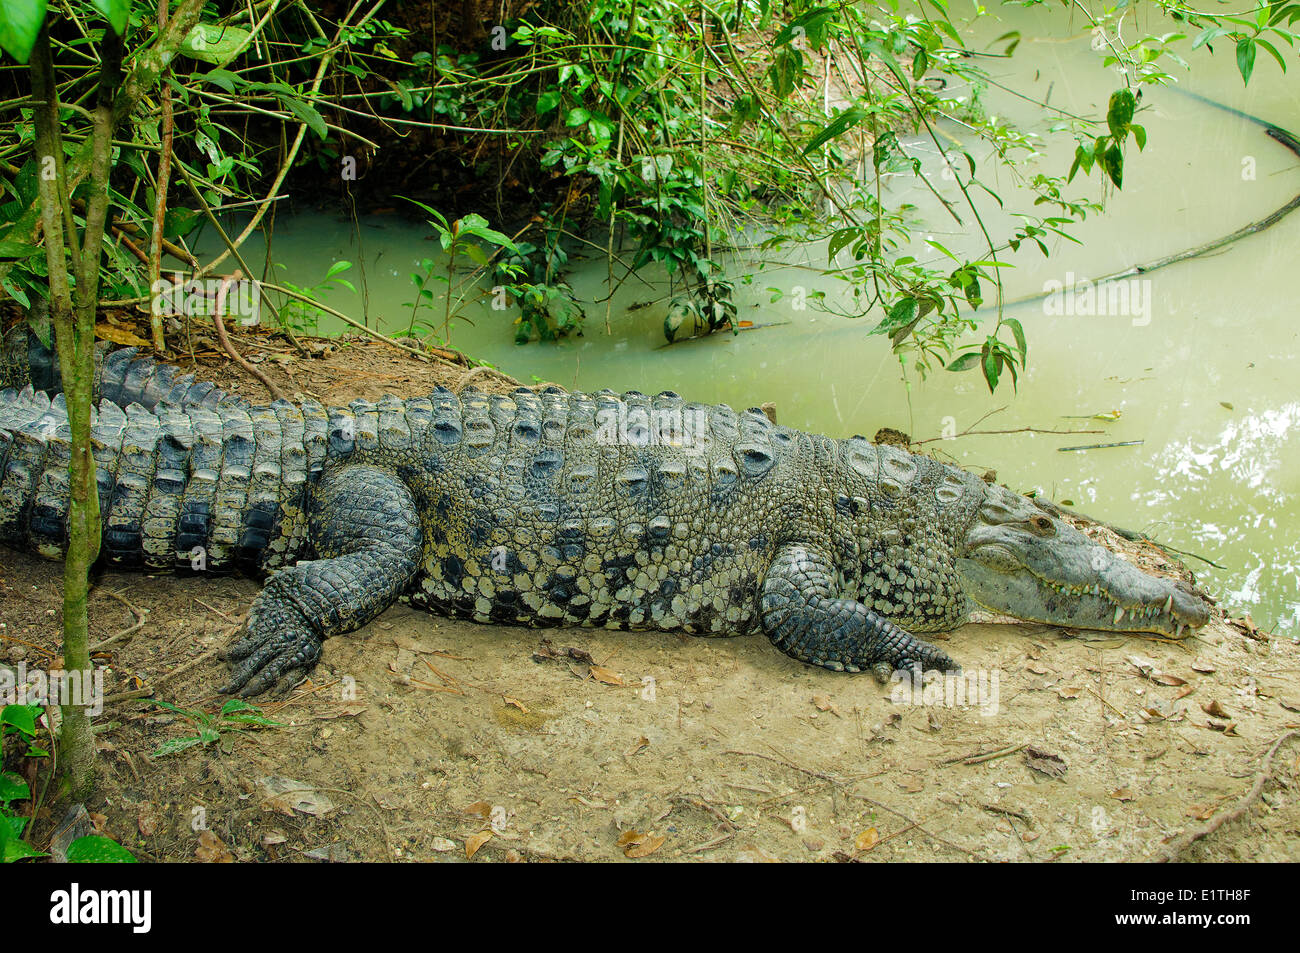 Coccodrillo americano (Crocodylus acutus) basking, Belize, America Centrale Foto Stock